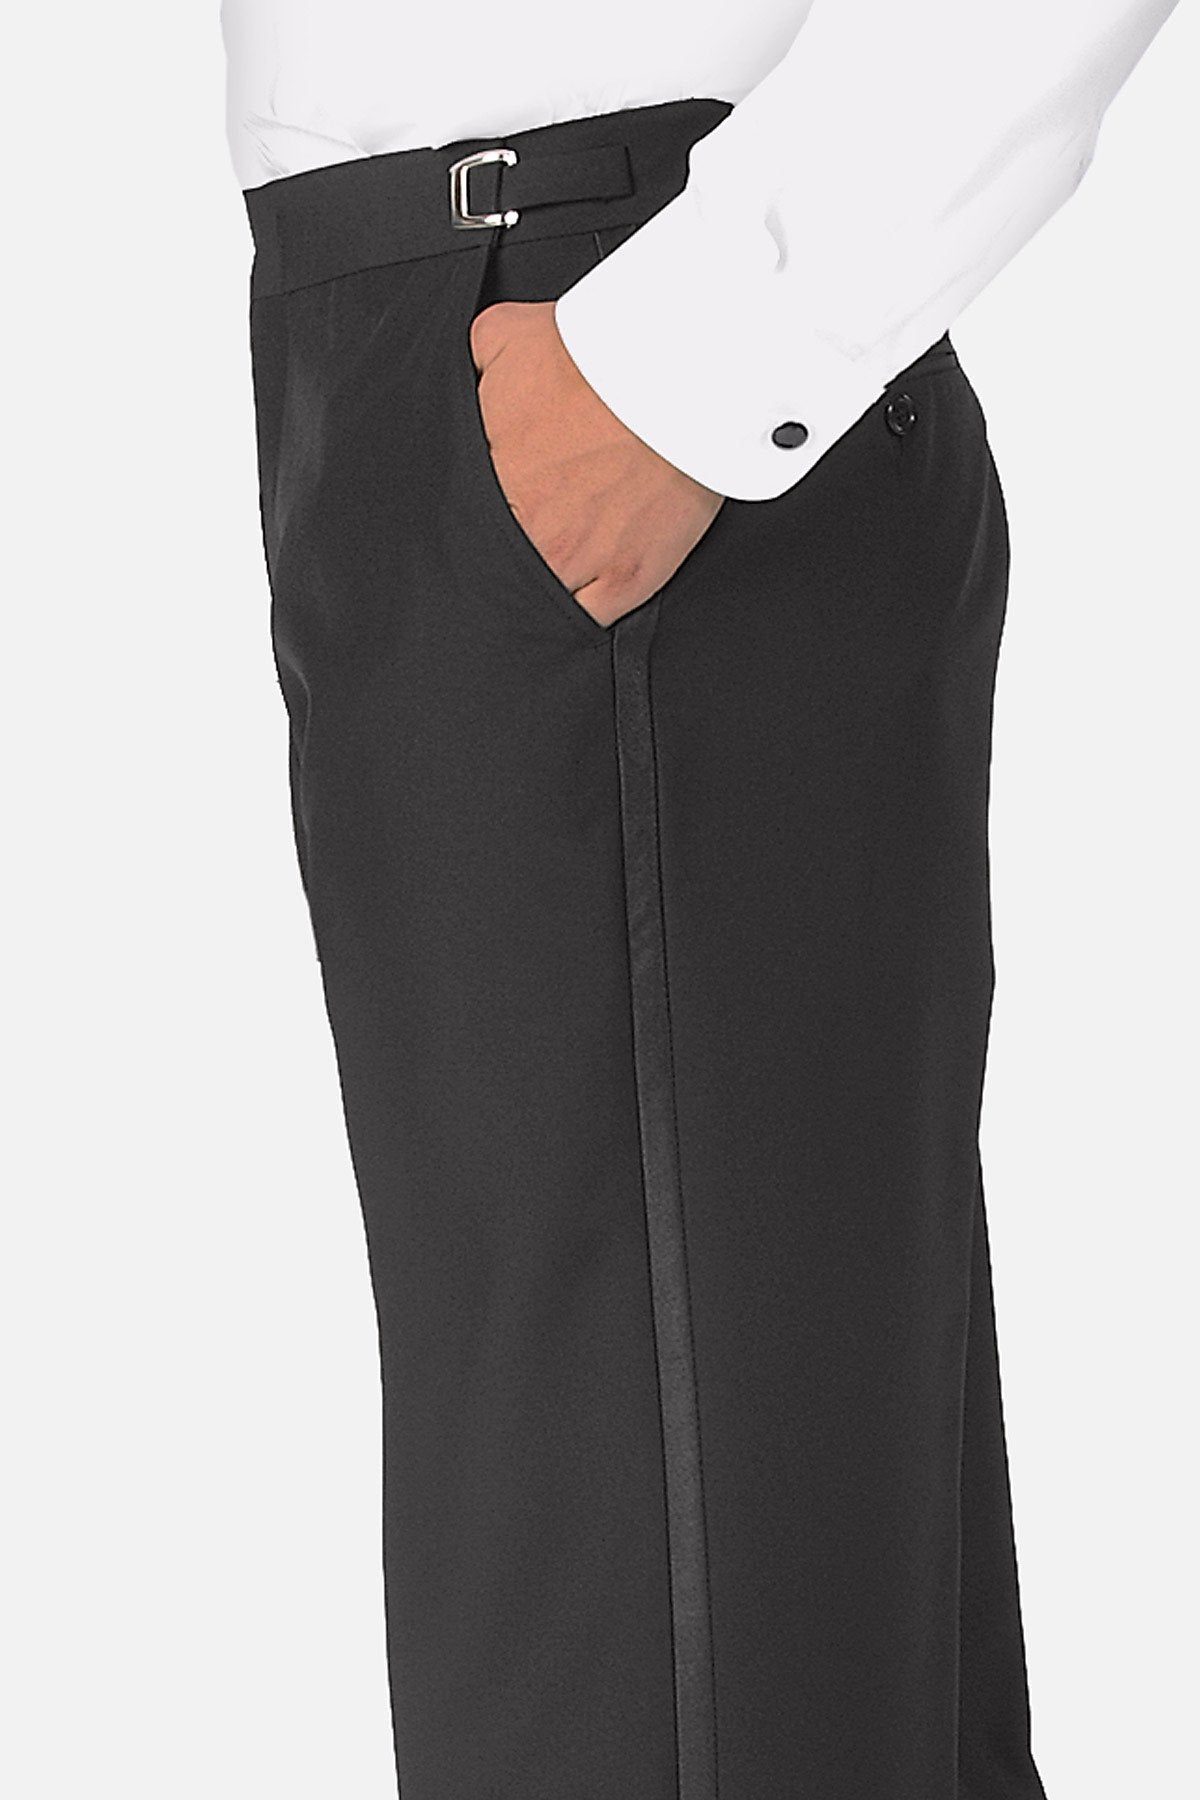 Daniel Black Polyester Plain Front Tuxedo Pants –